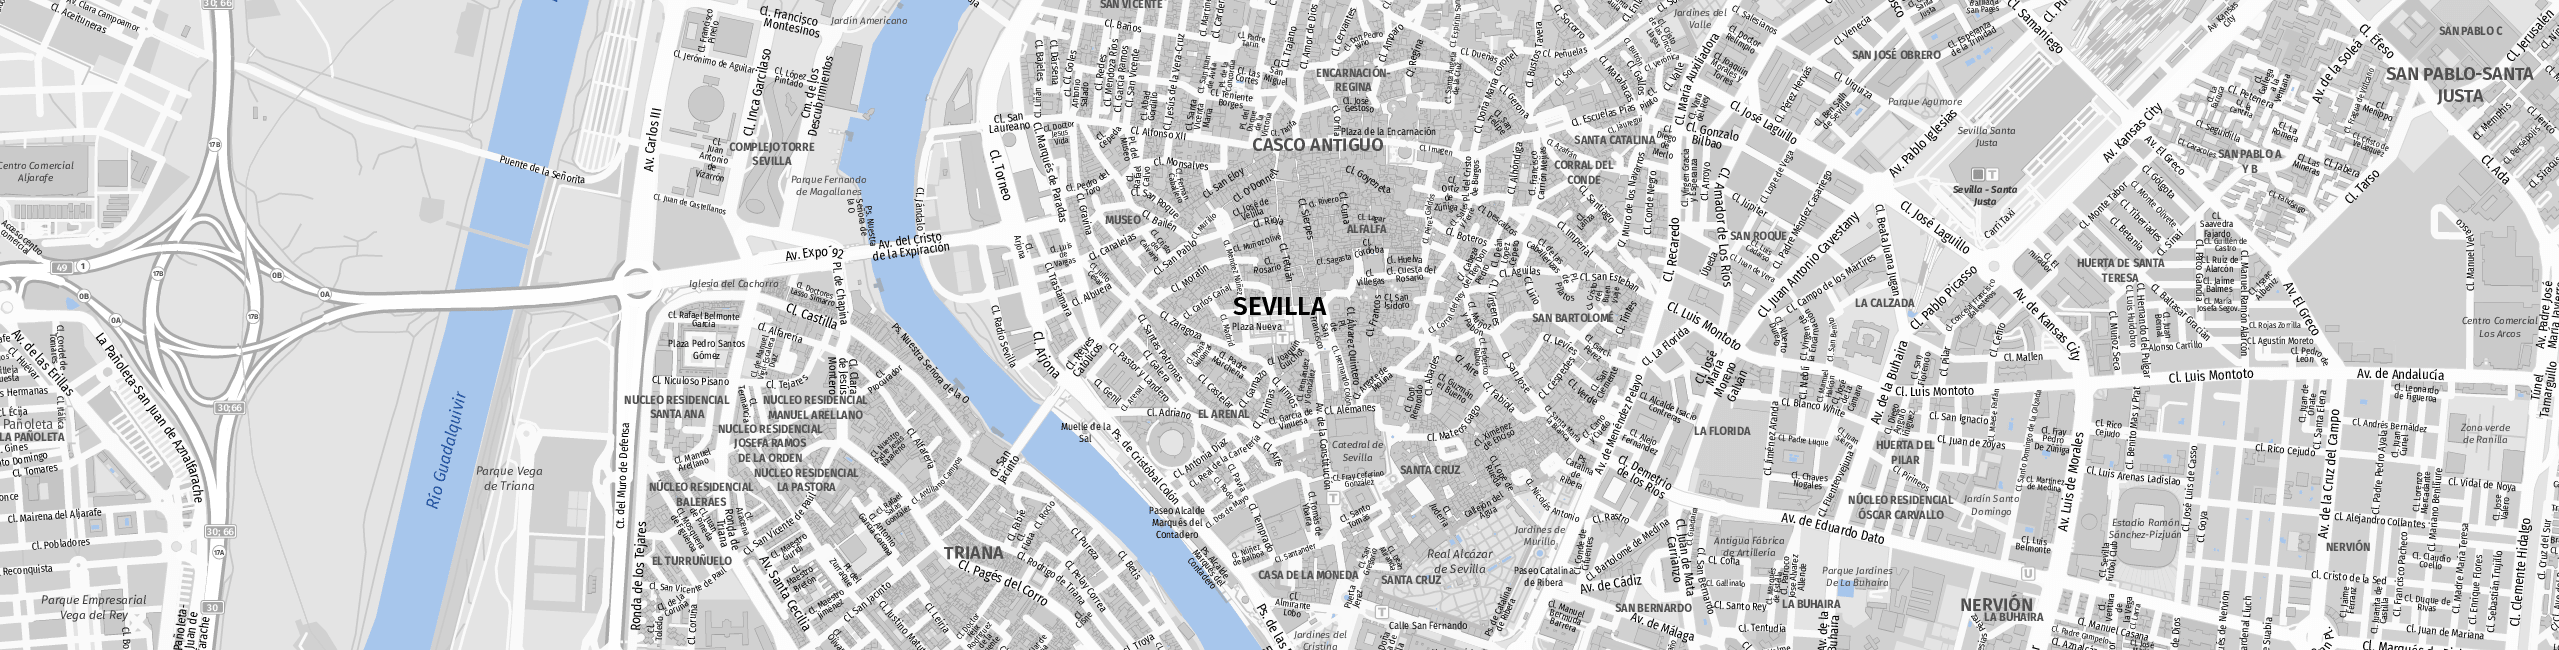 Stadtplan Seville zum Downloaden.